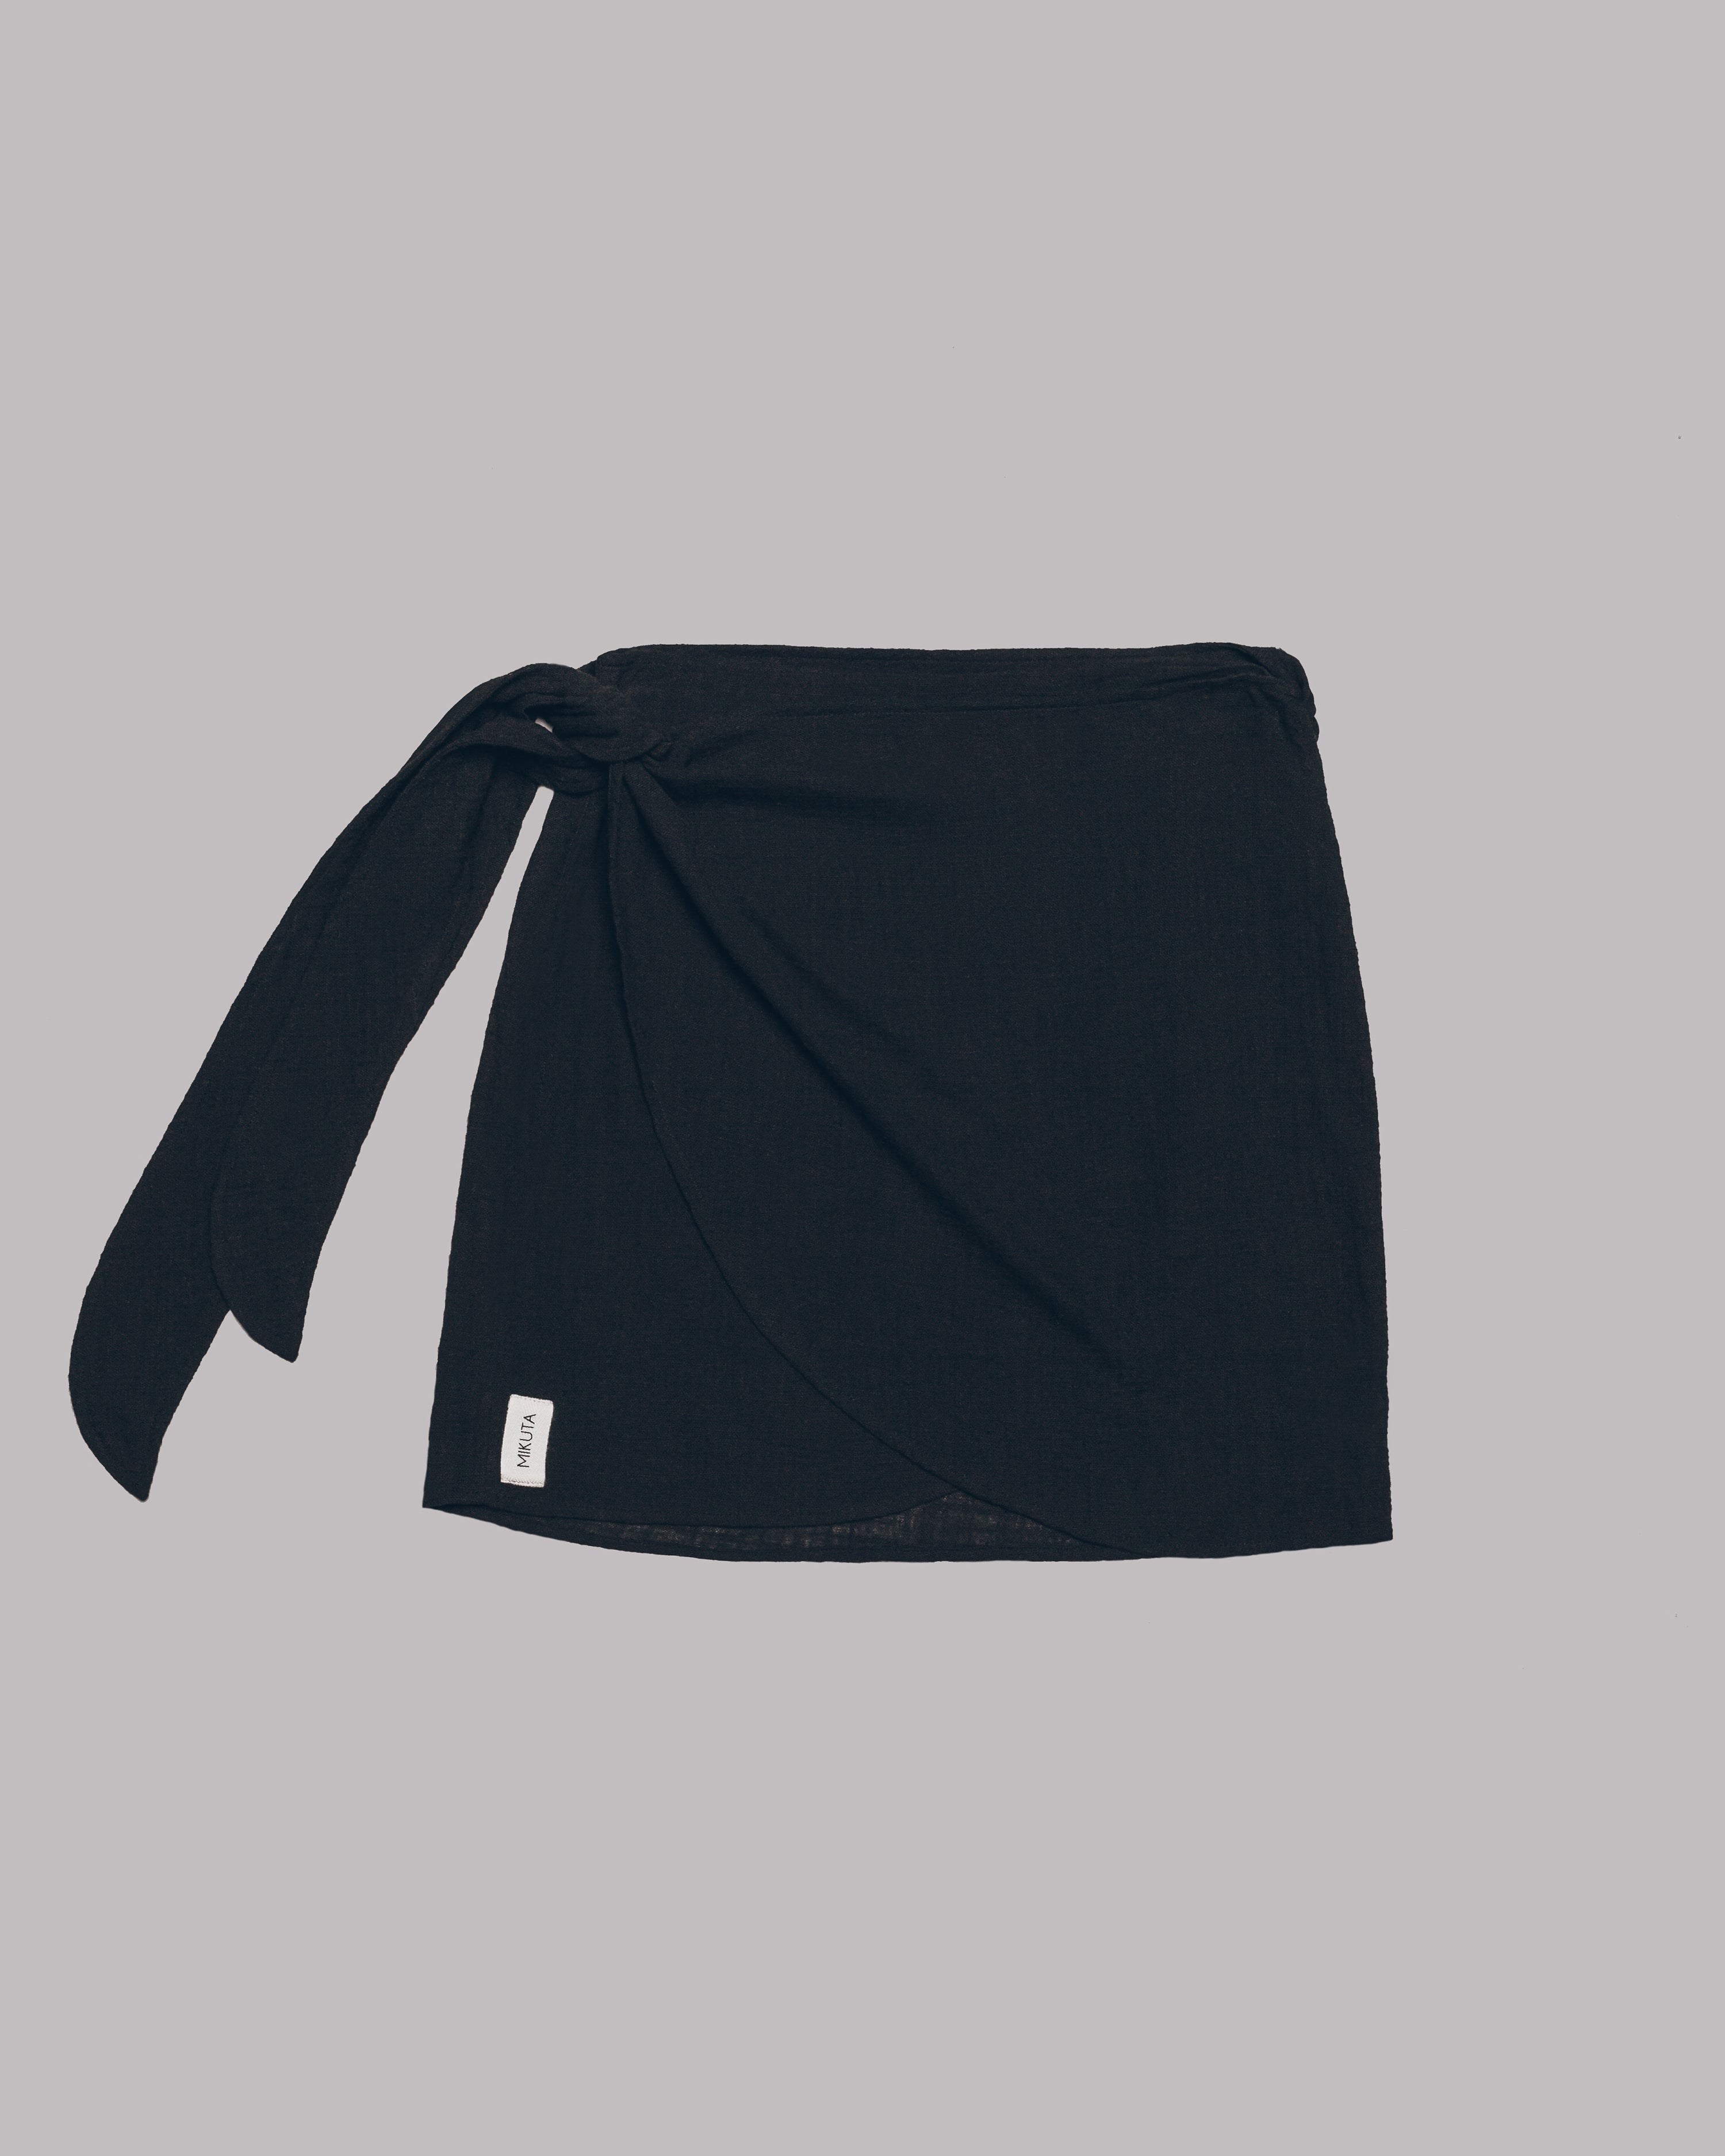 The Black Wrap Skirt